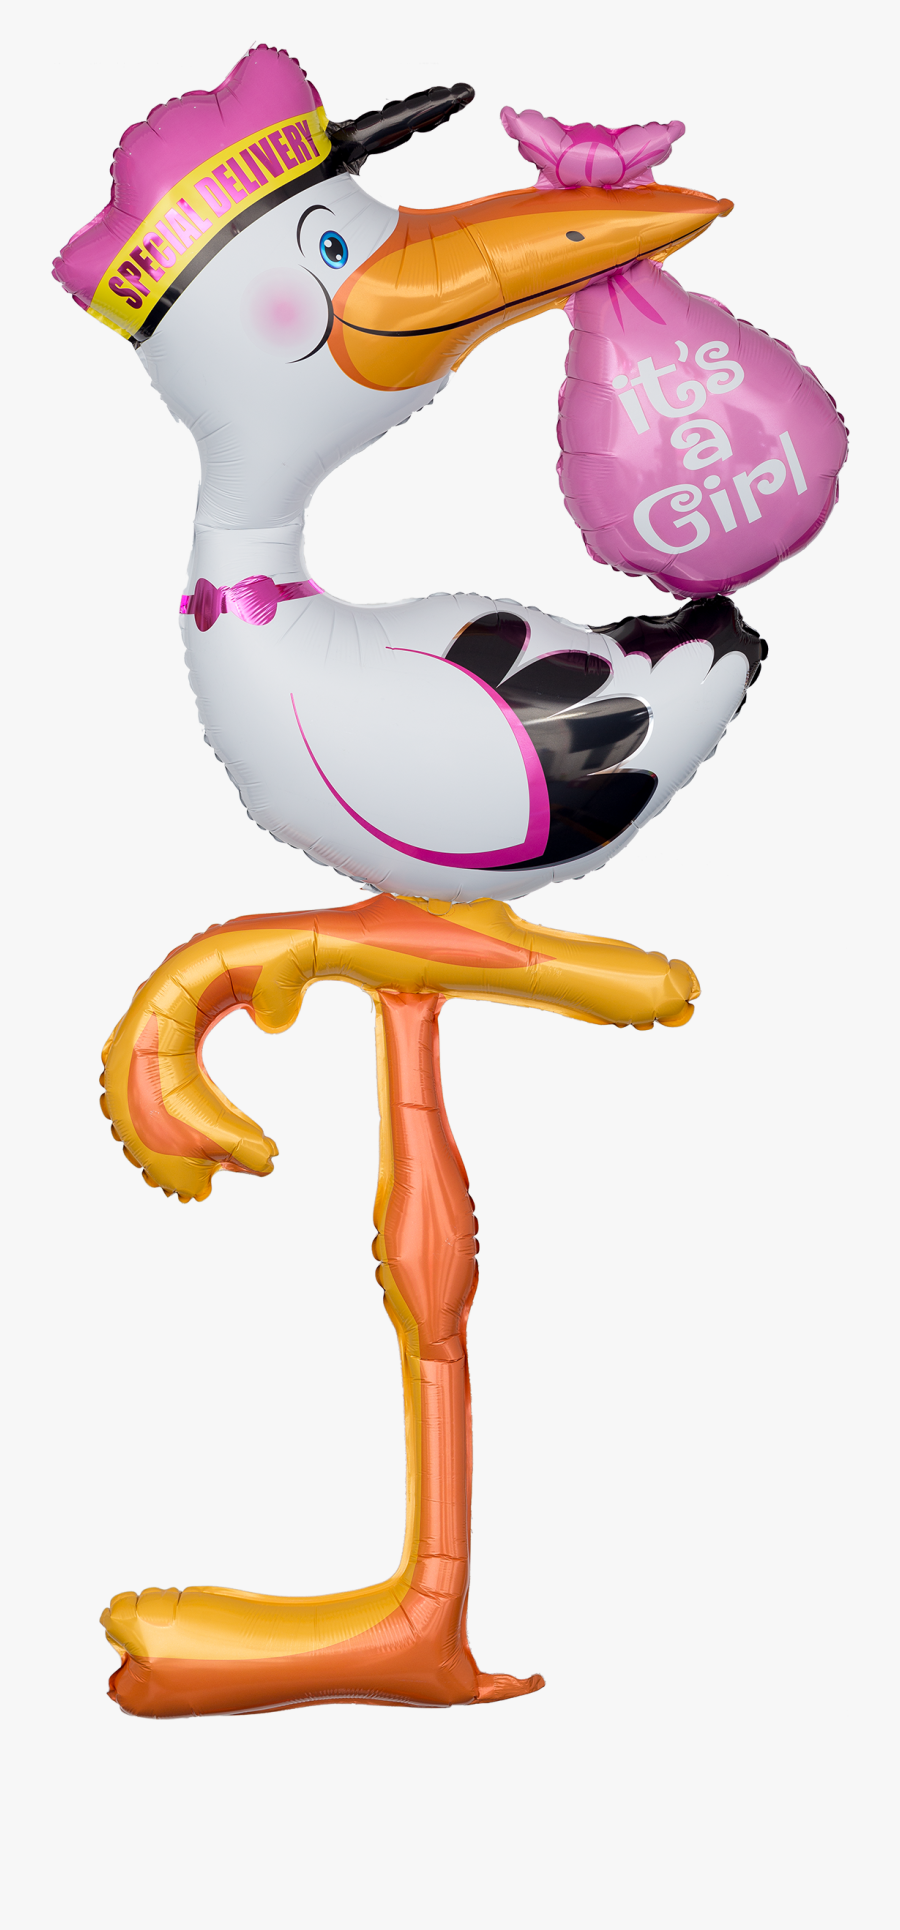 Png Clipart Storch - Stork Its A Boy Png, Transparent Clipart